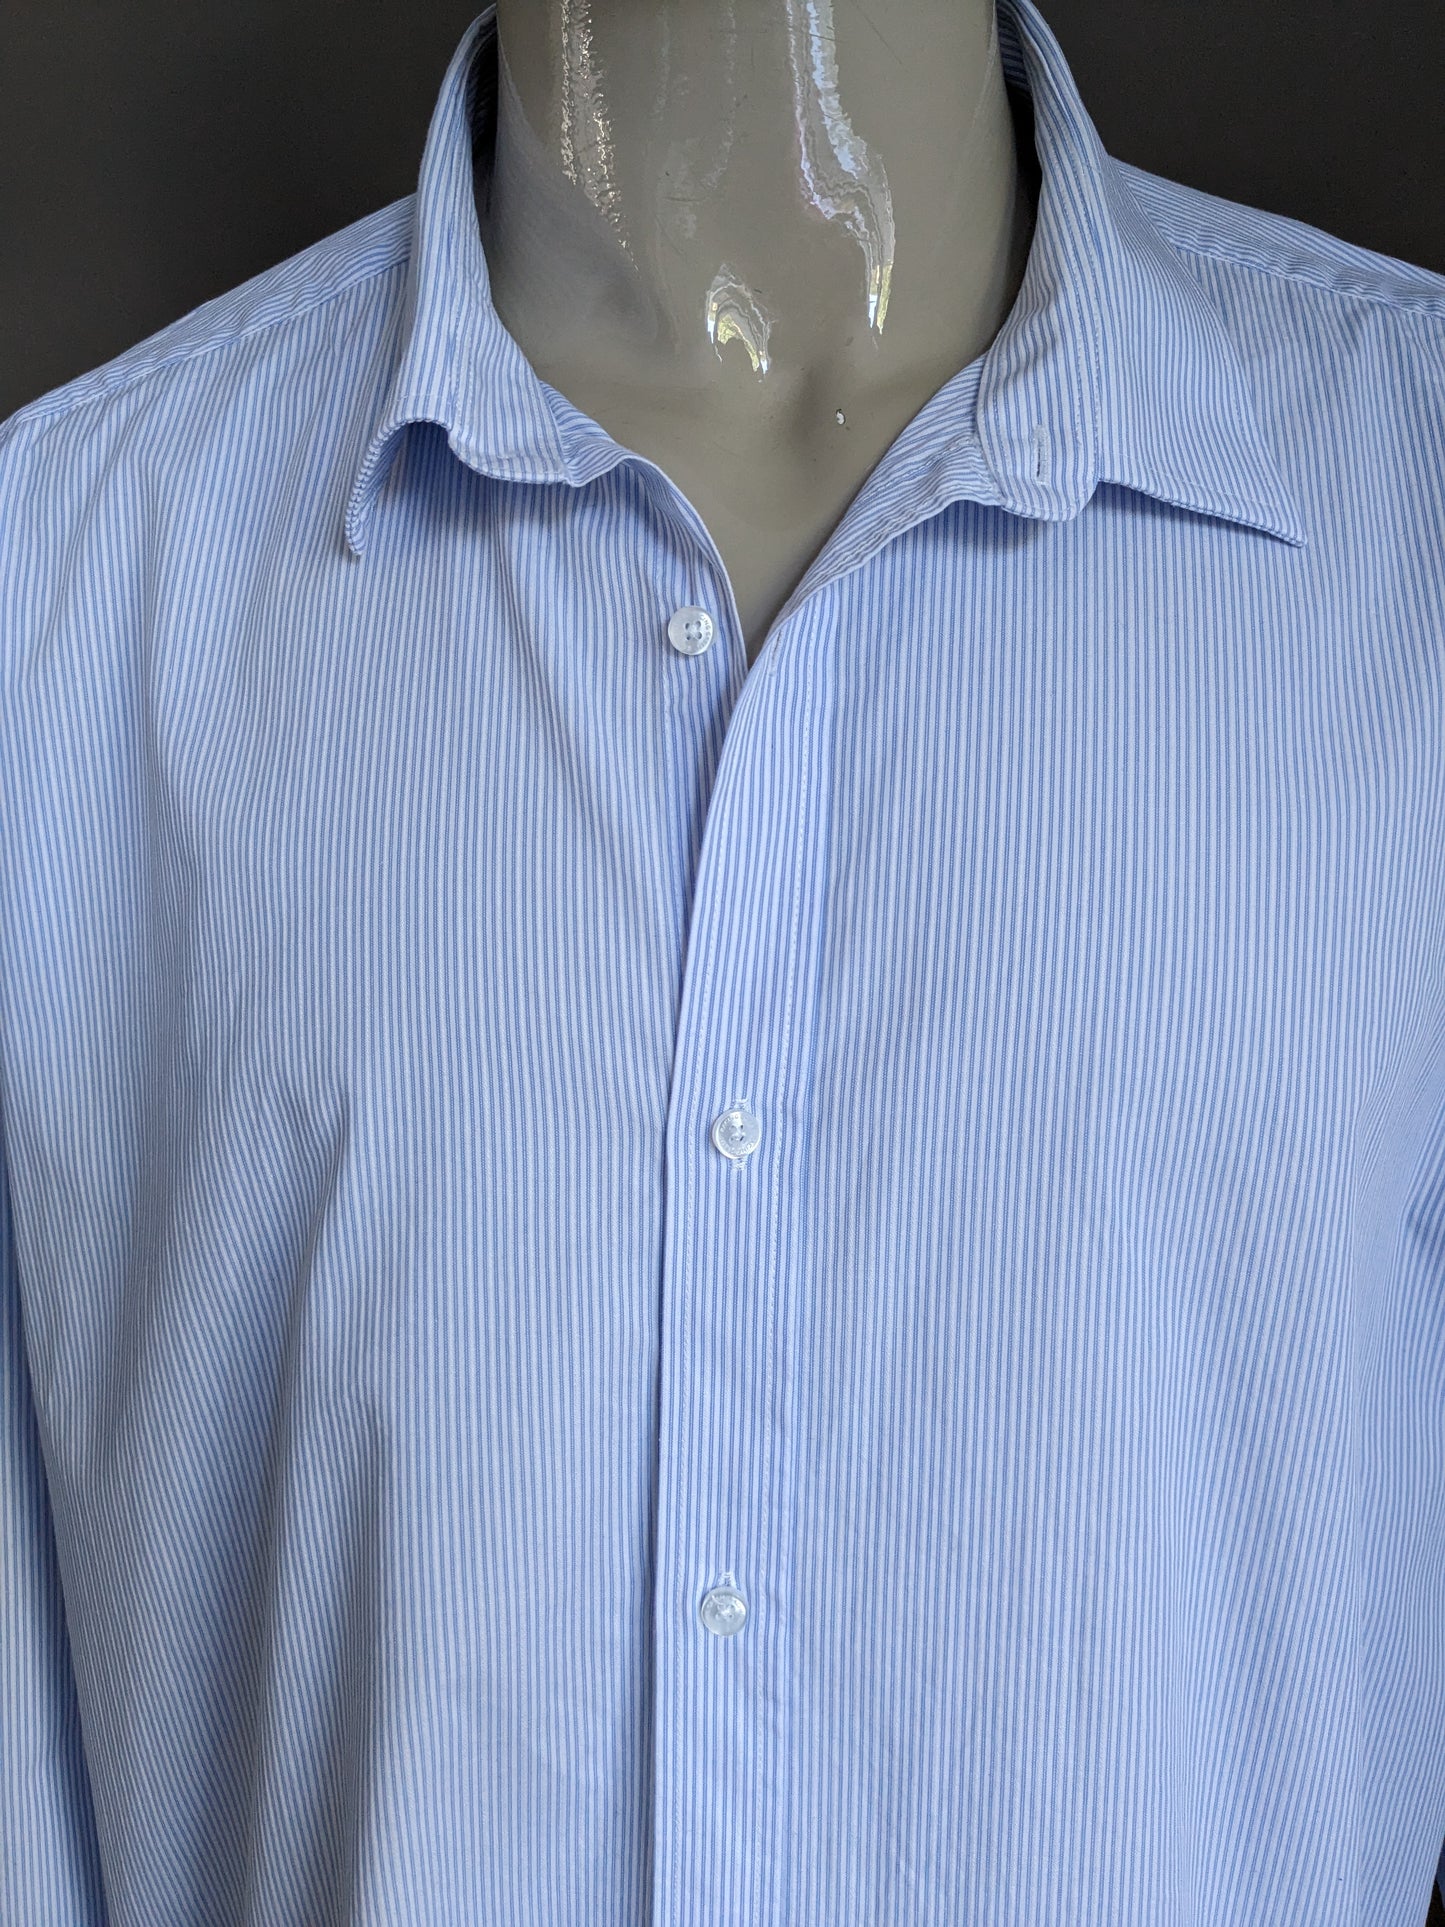 Racing Green shirt. Blue white striped. Size 48 / 2XL-XXL. Regular fit.